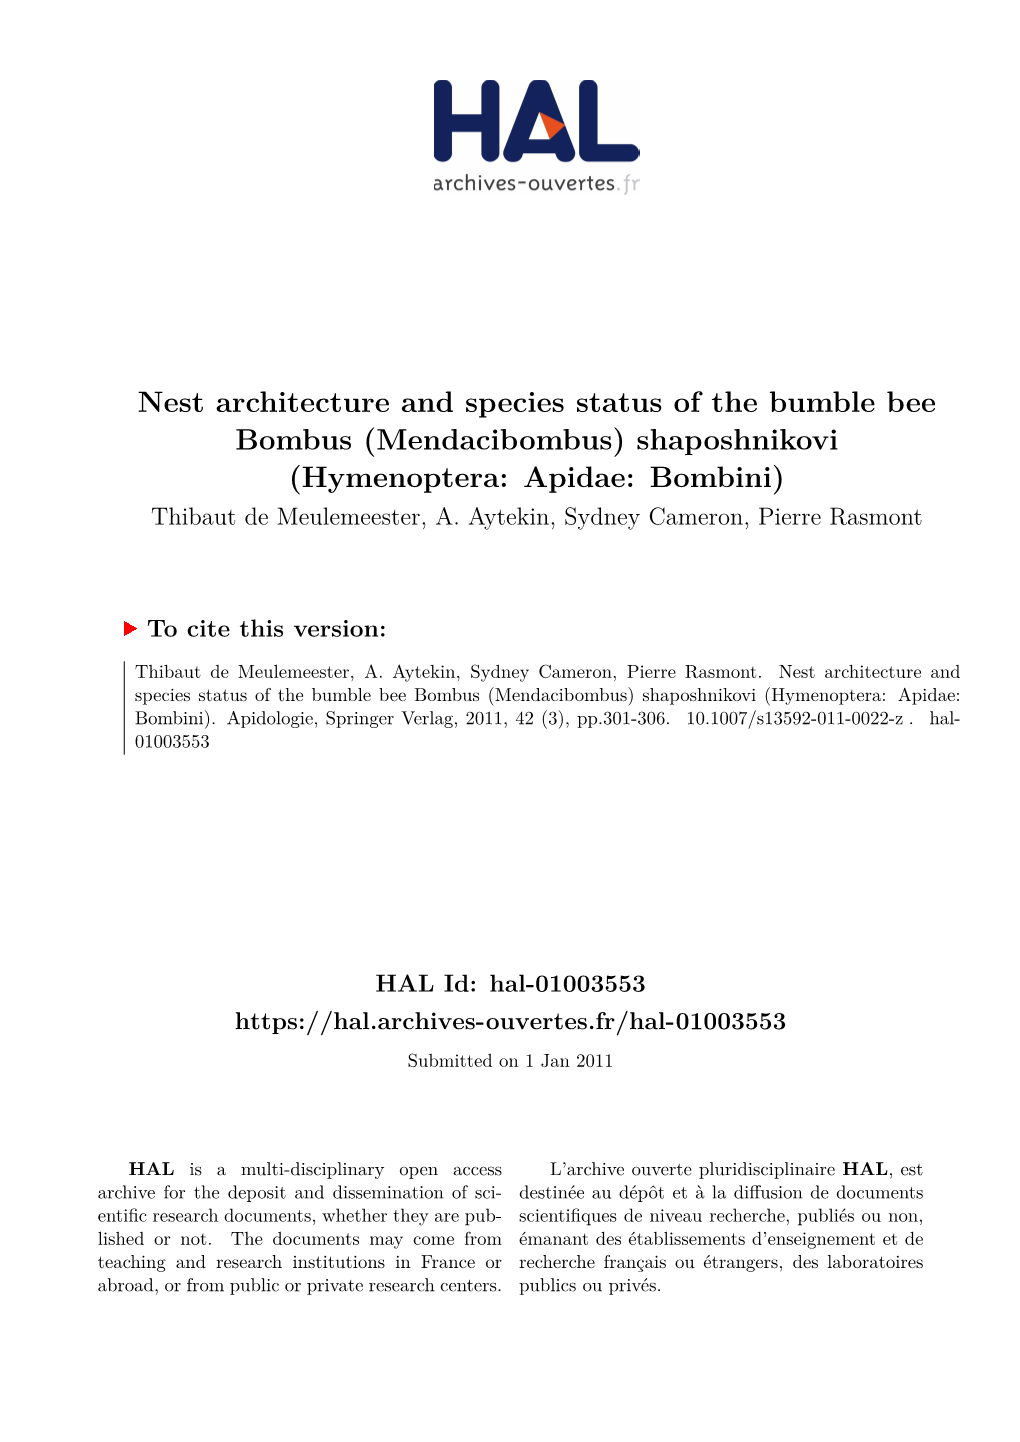 Nest Architecture and Species Status of the Bumble Bee Bombus (Mendacibombus) Shaposhnikovi (Hymenoptera: Apidae: Bombini) Thibaut De Meulemeester, A